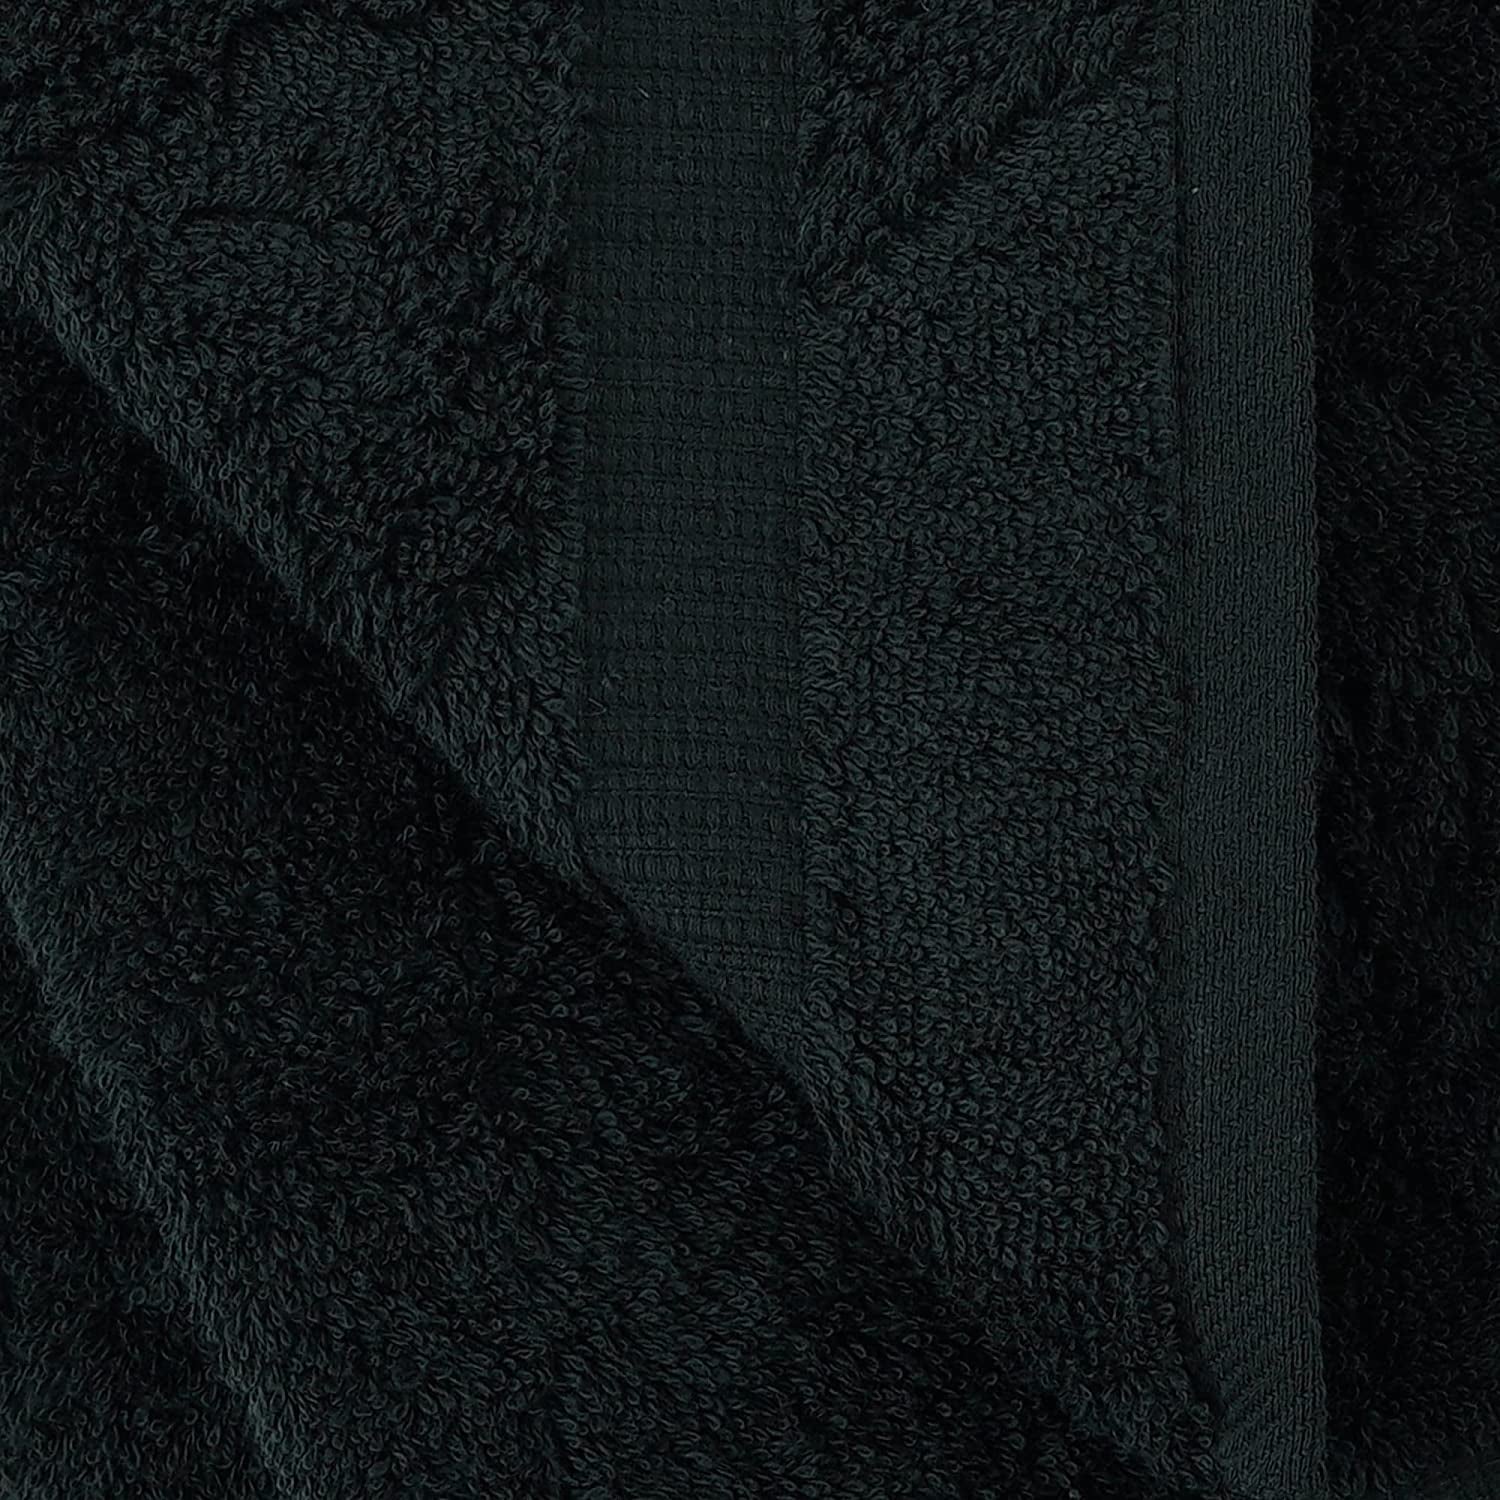 Premium Turkish Cotton Super Soft and Absorbent Towels (4-Piece Bath Towels, Black)